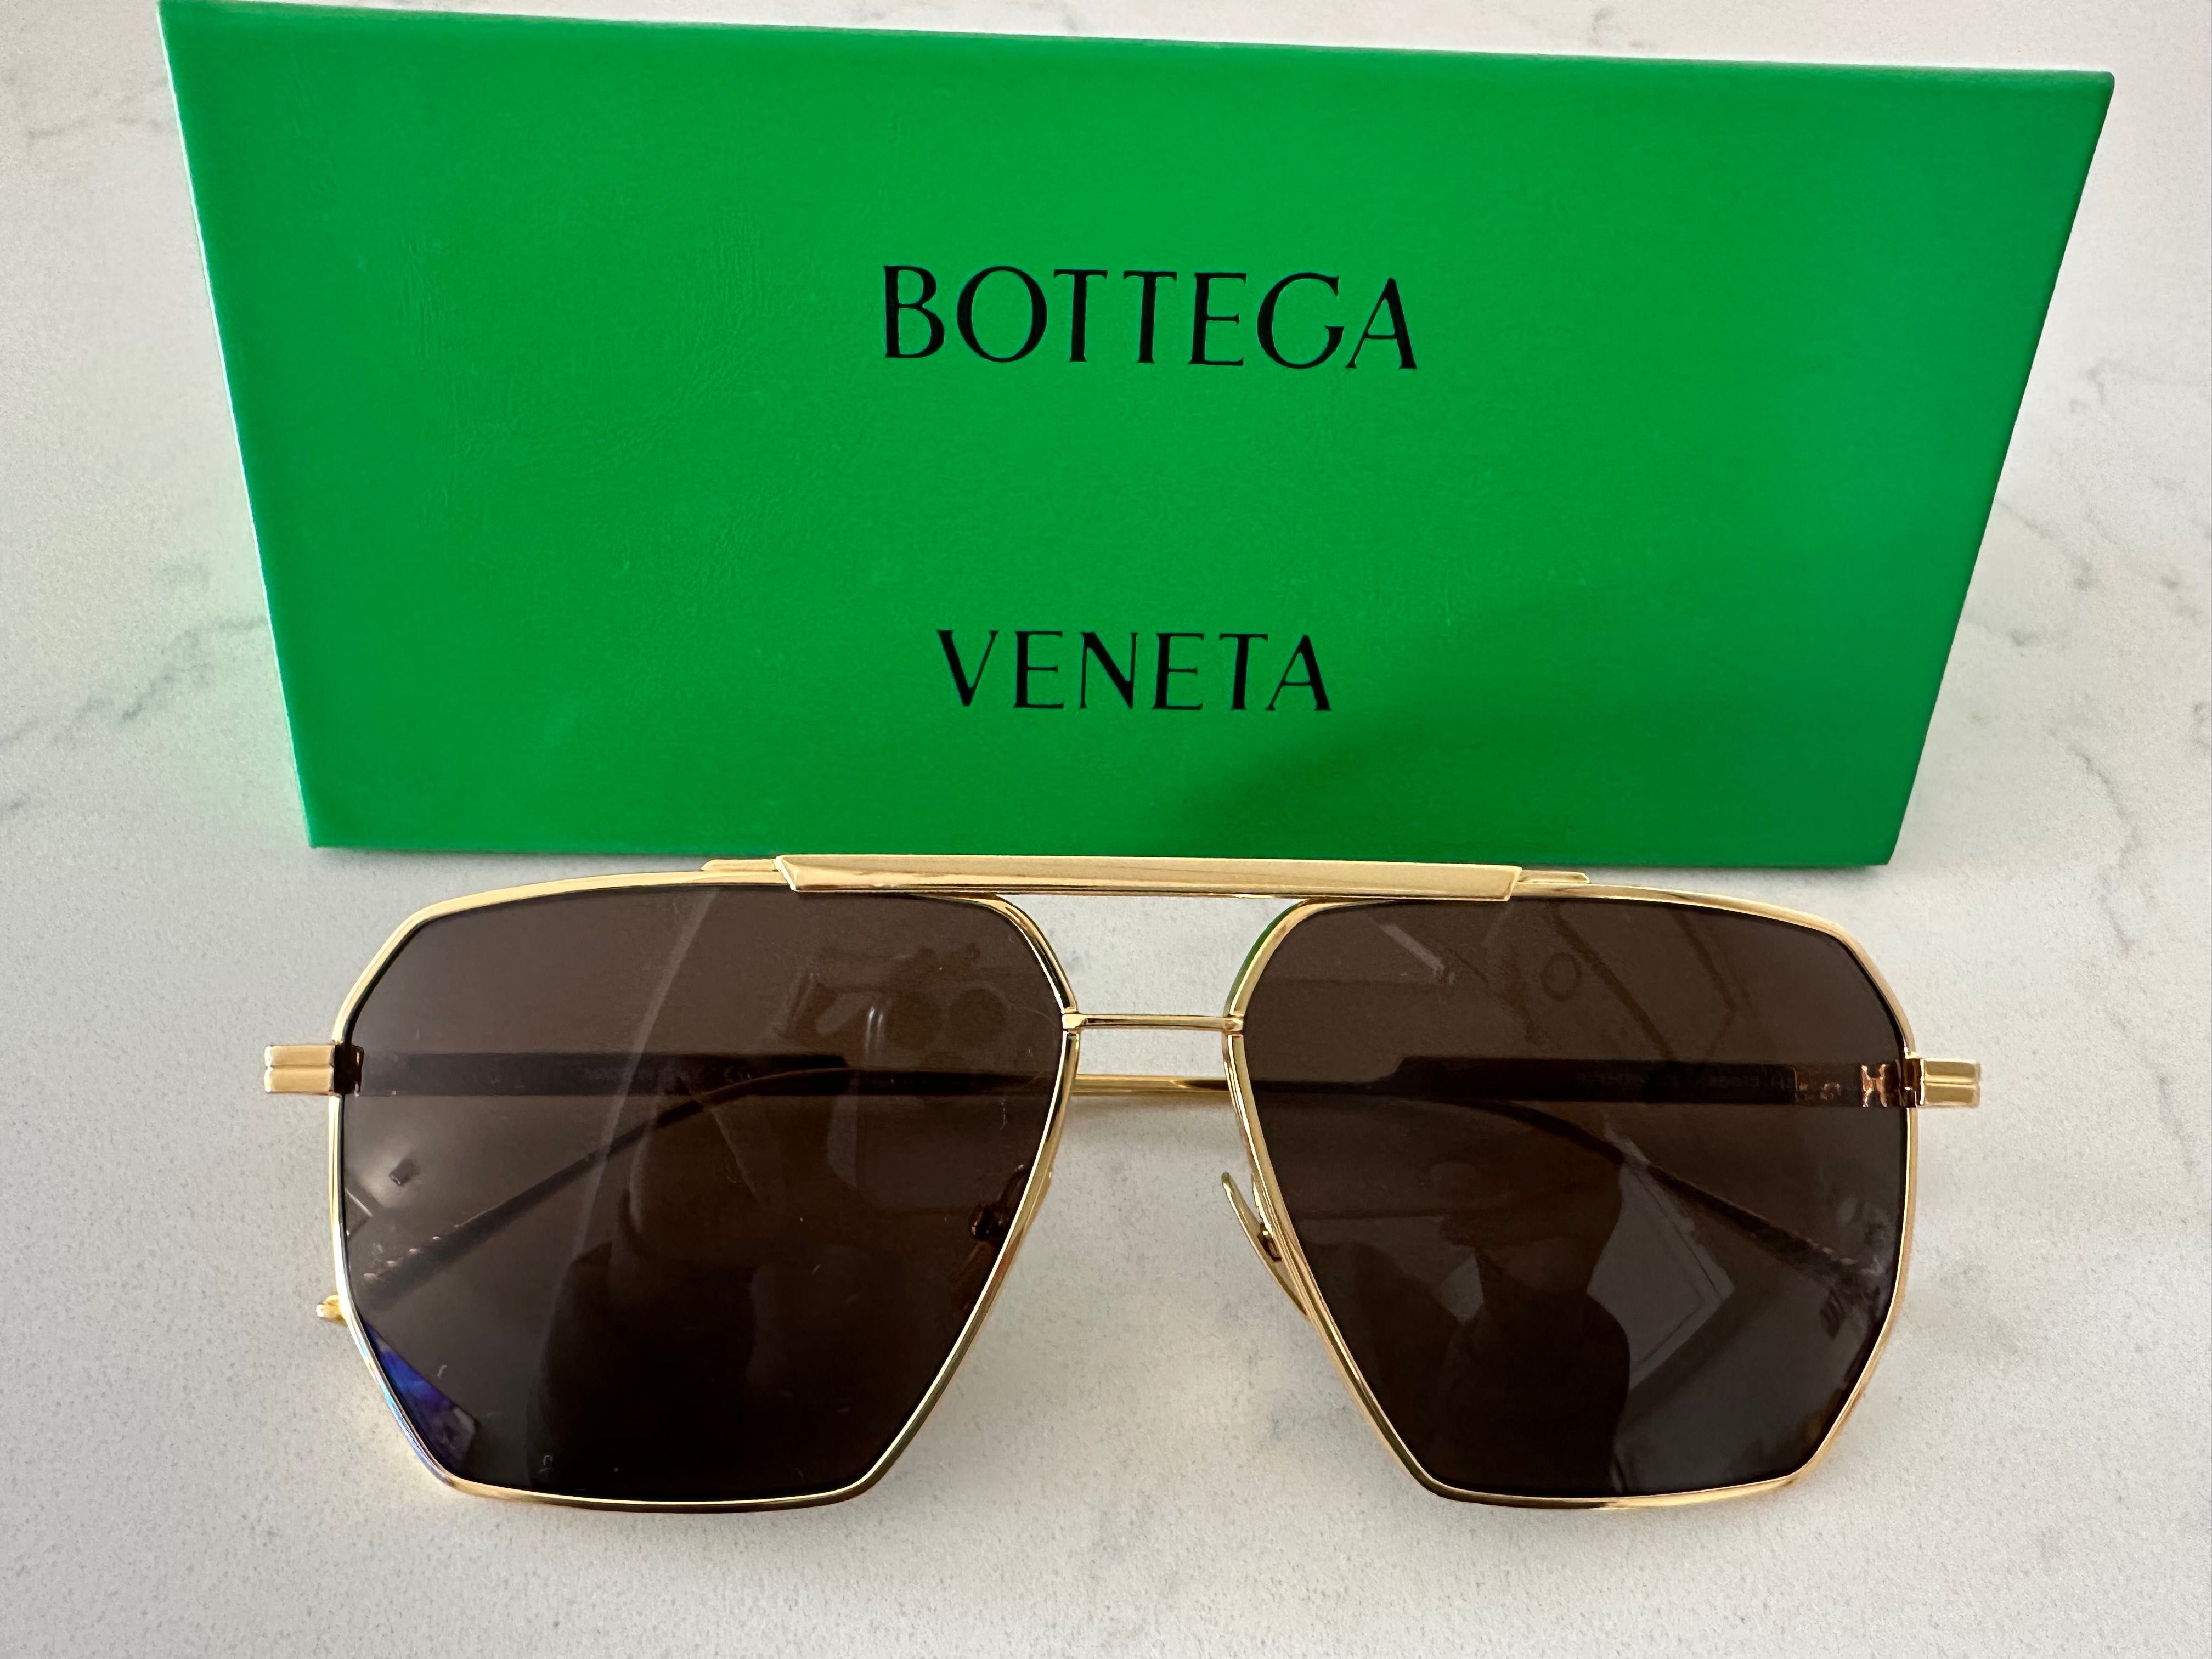 Bottega Veneta BV1012S oryginalne okulary przeciwsłoneczne